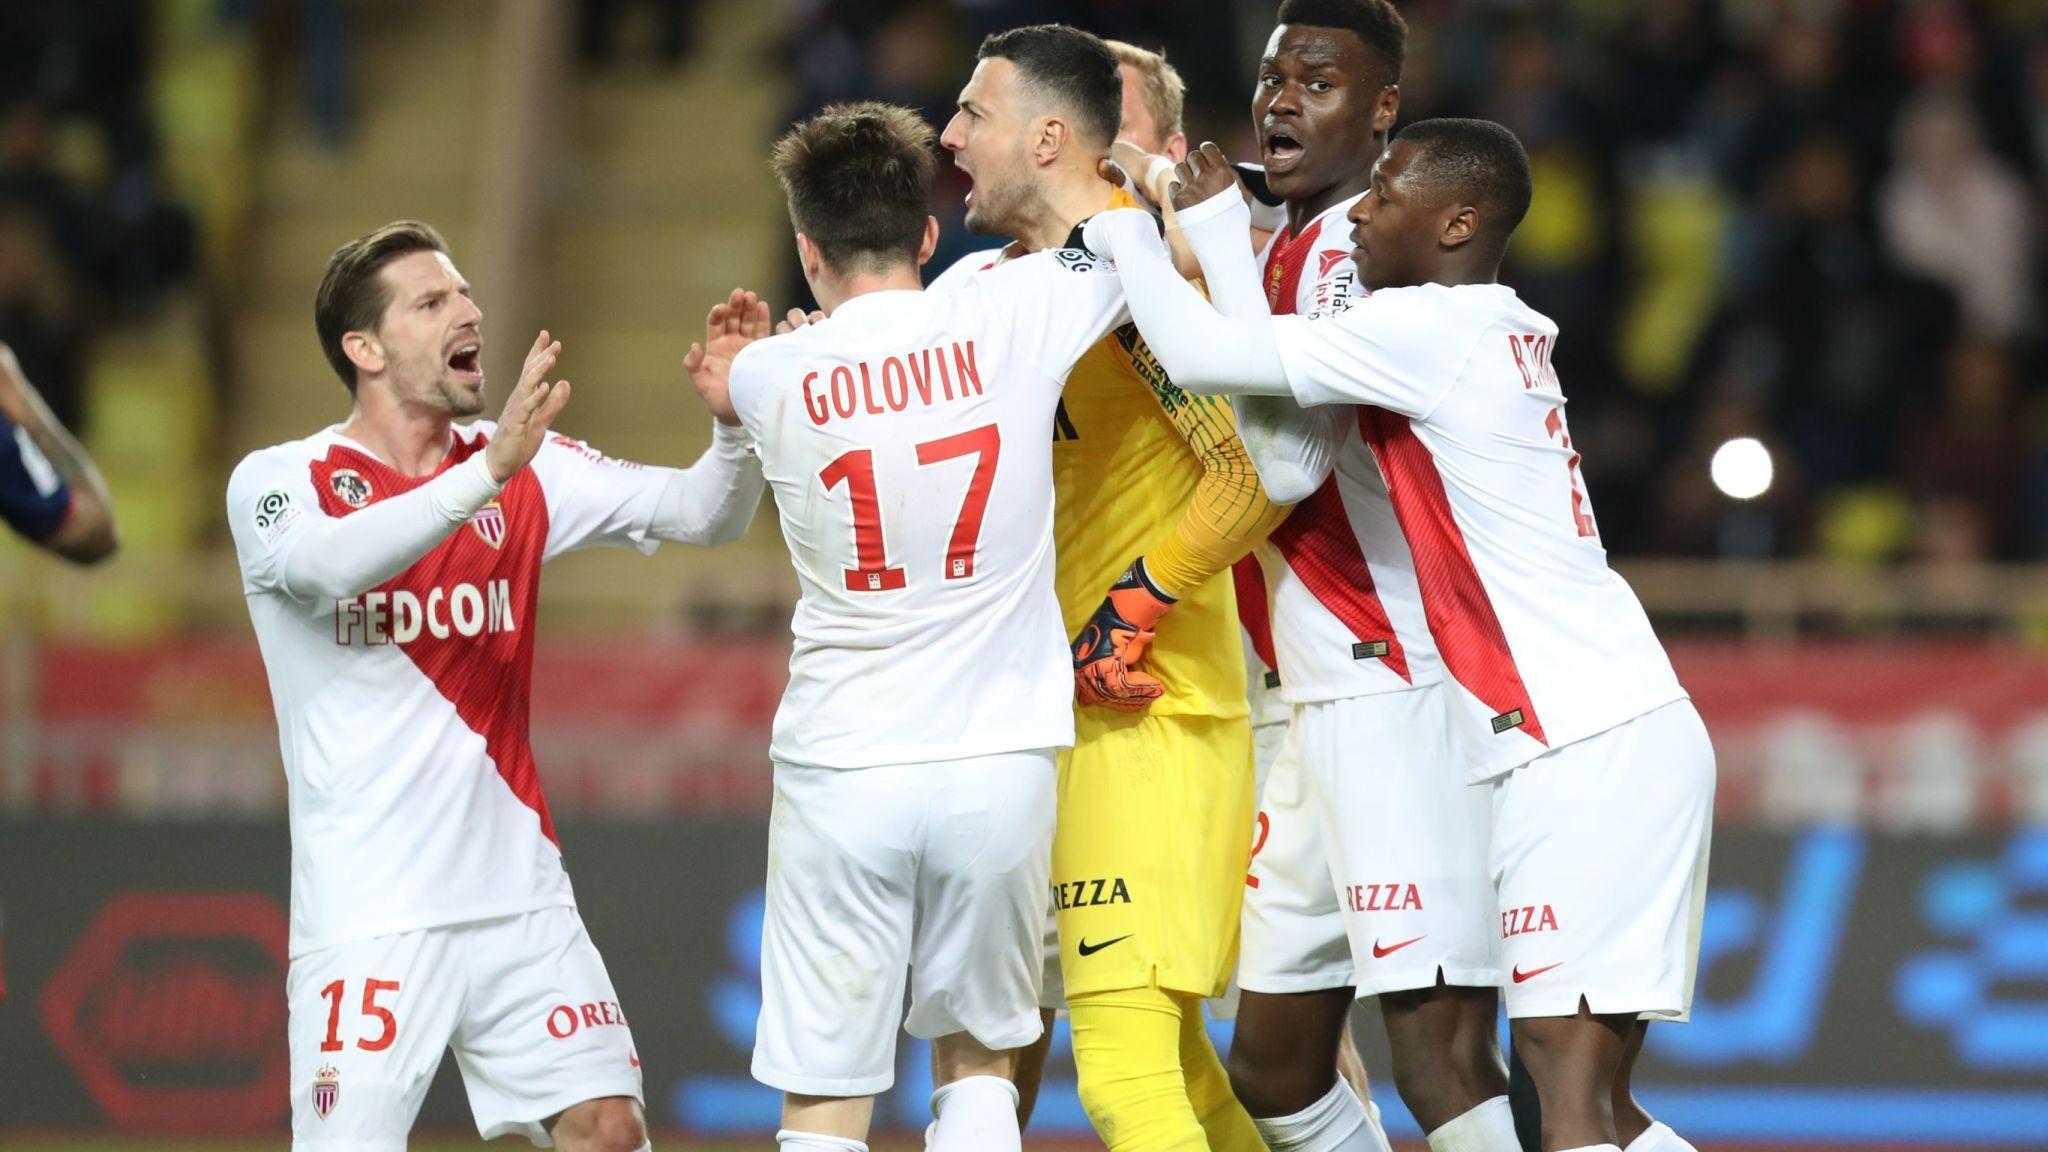 Ligue 1 Round Up: Monaco Claim Vital Win In Relegation Battle